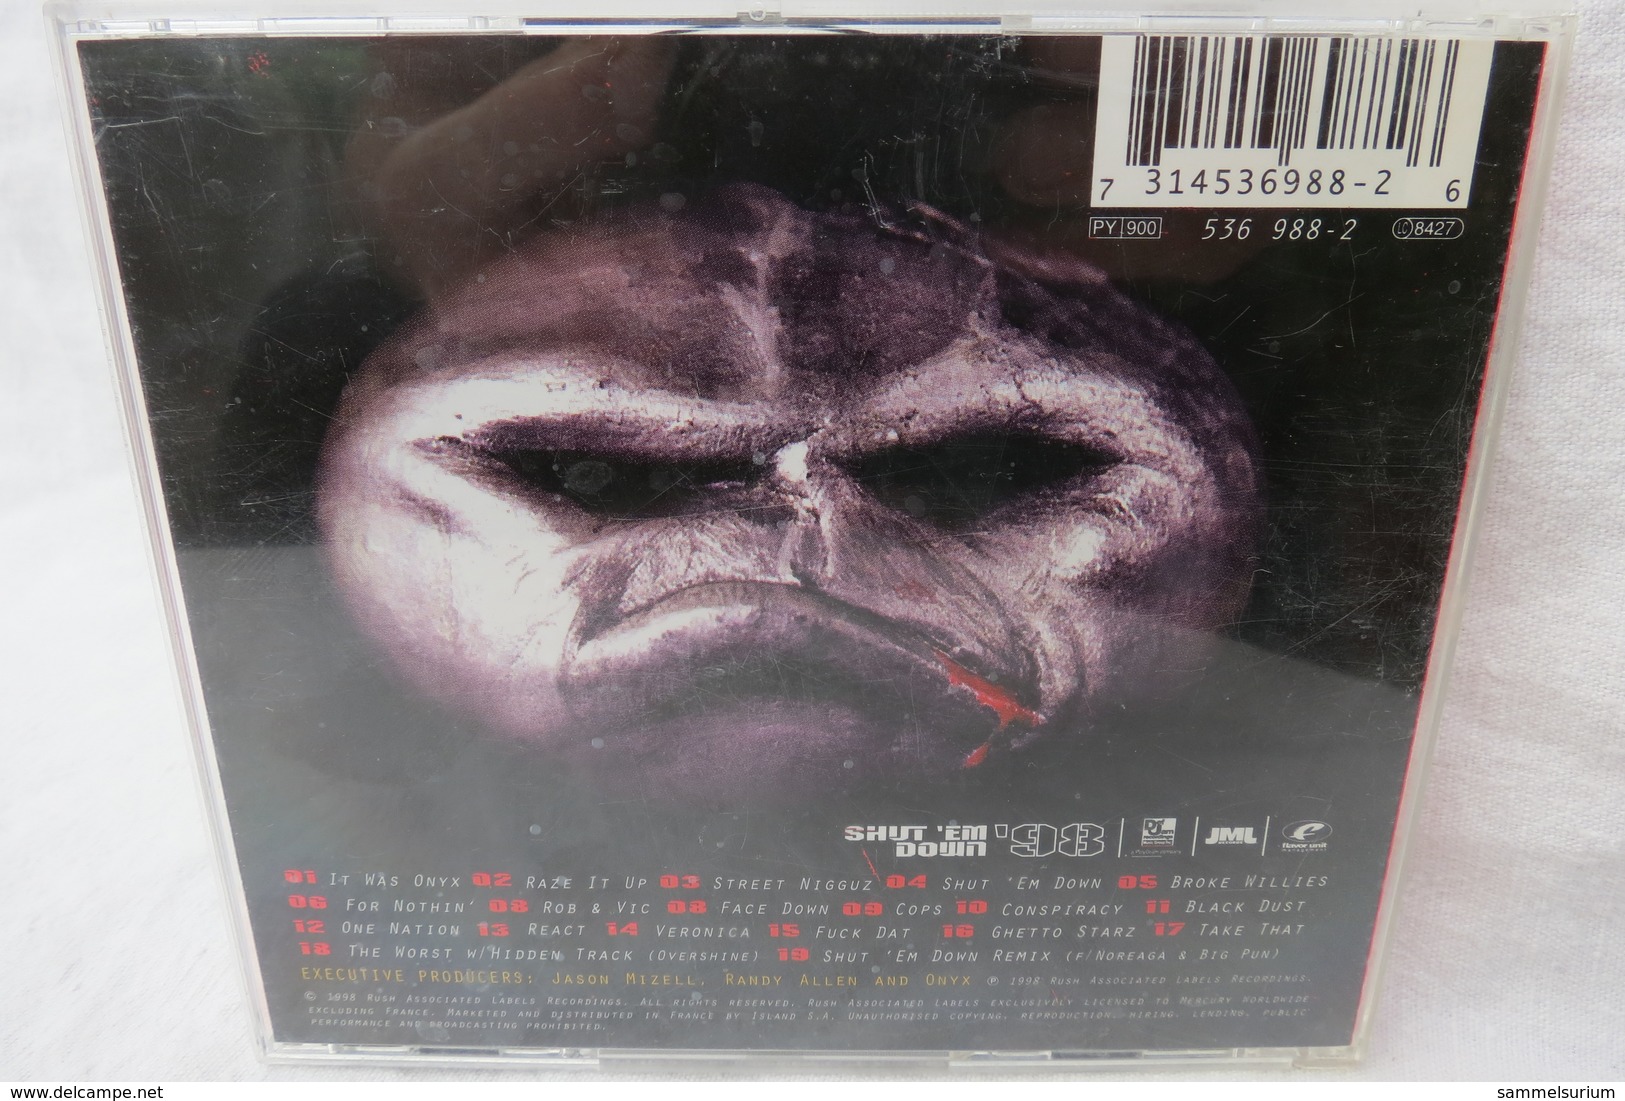 CD "Onyx" Shut 'em Down - Rap En Hip Hop